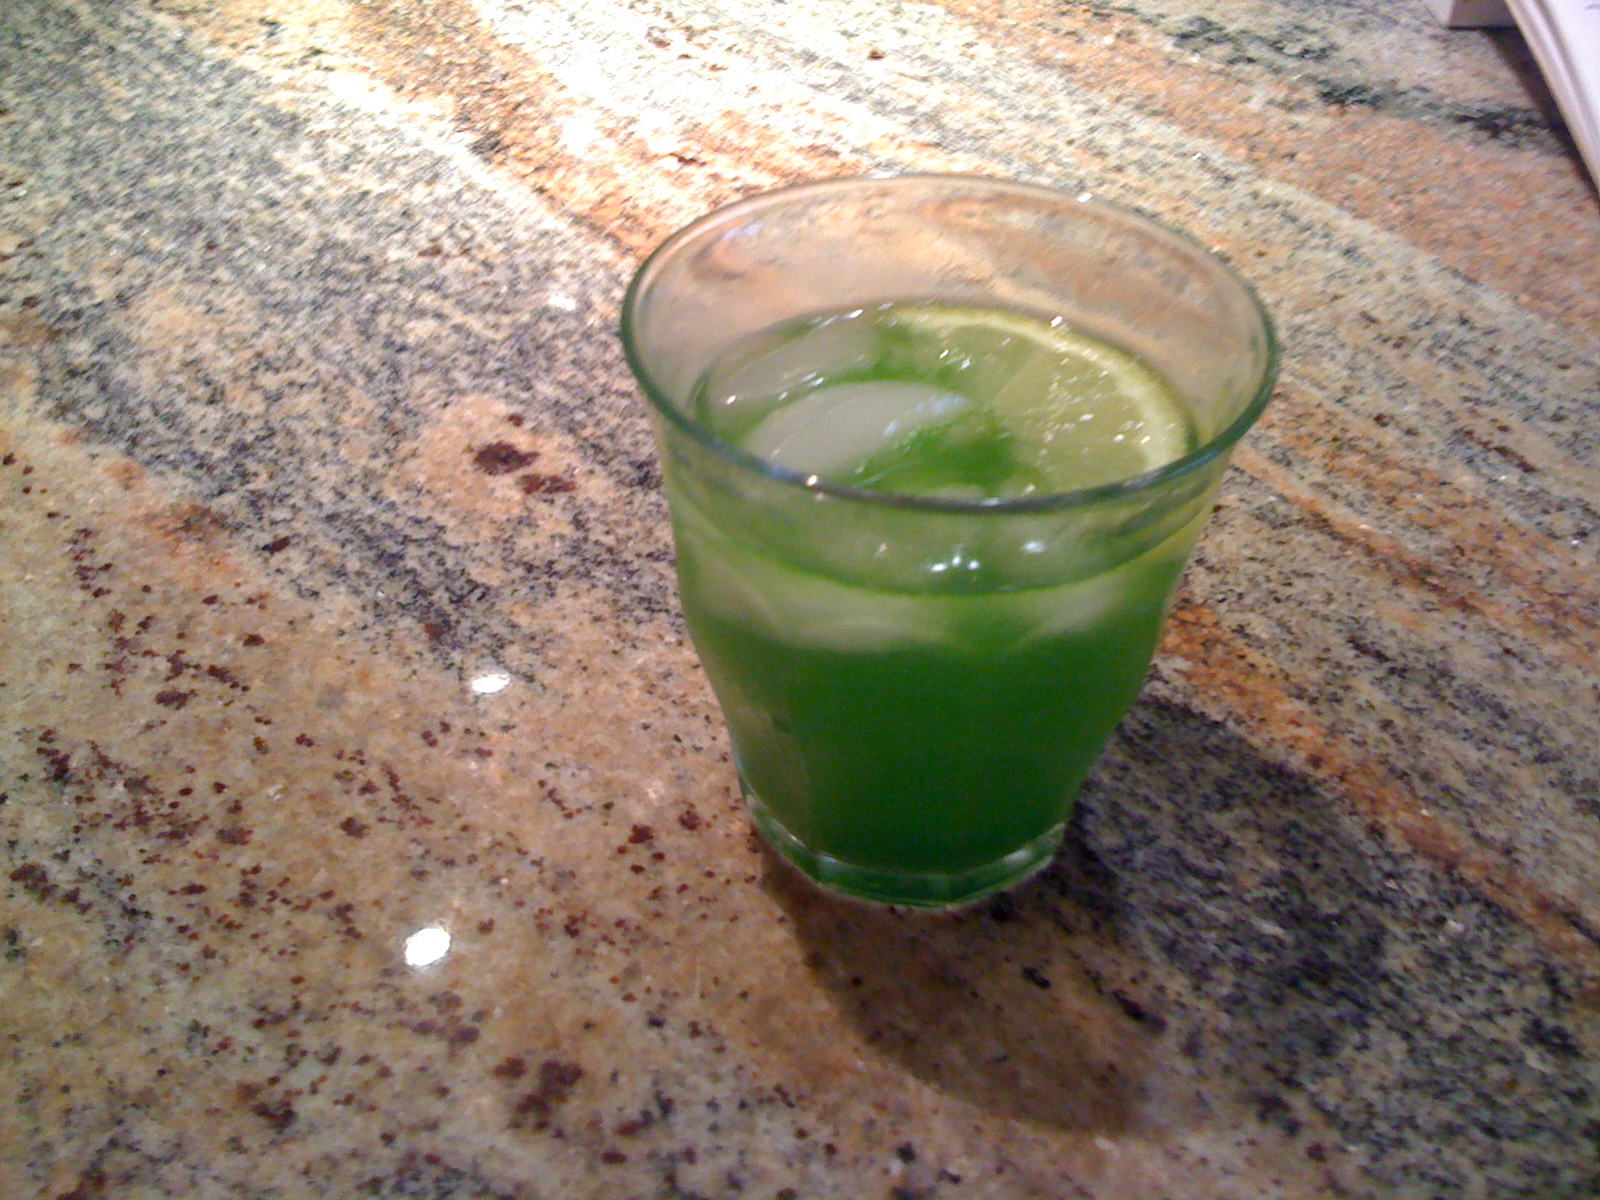 http://4.bp.blogspot.com/-5ux_9OlD14I/T-t_Ri1zxEI/AAAAAAAAEi8/9KA4klSAL1U/s1600/Green+drink.jpg